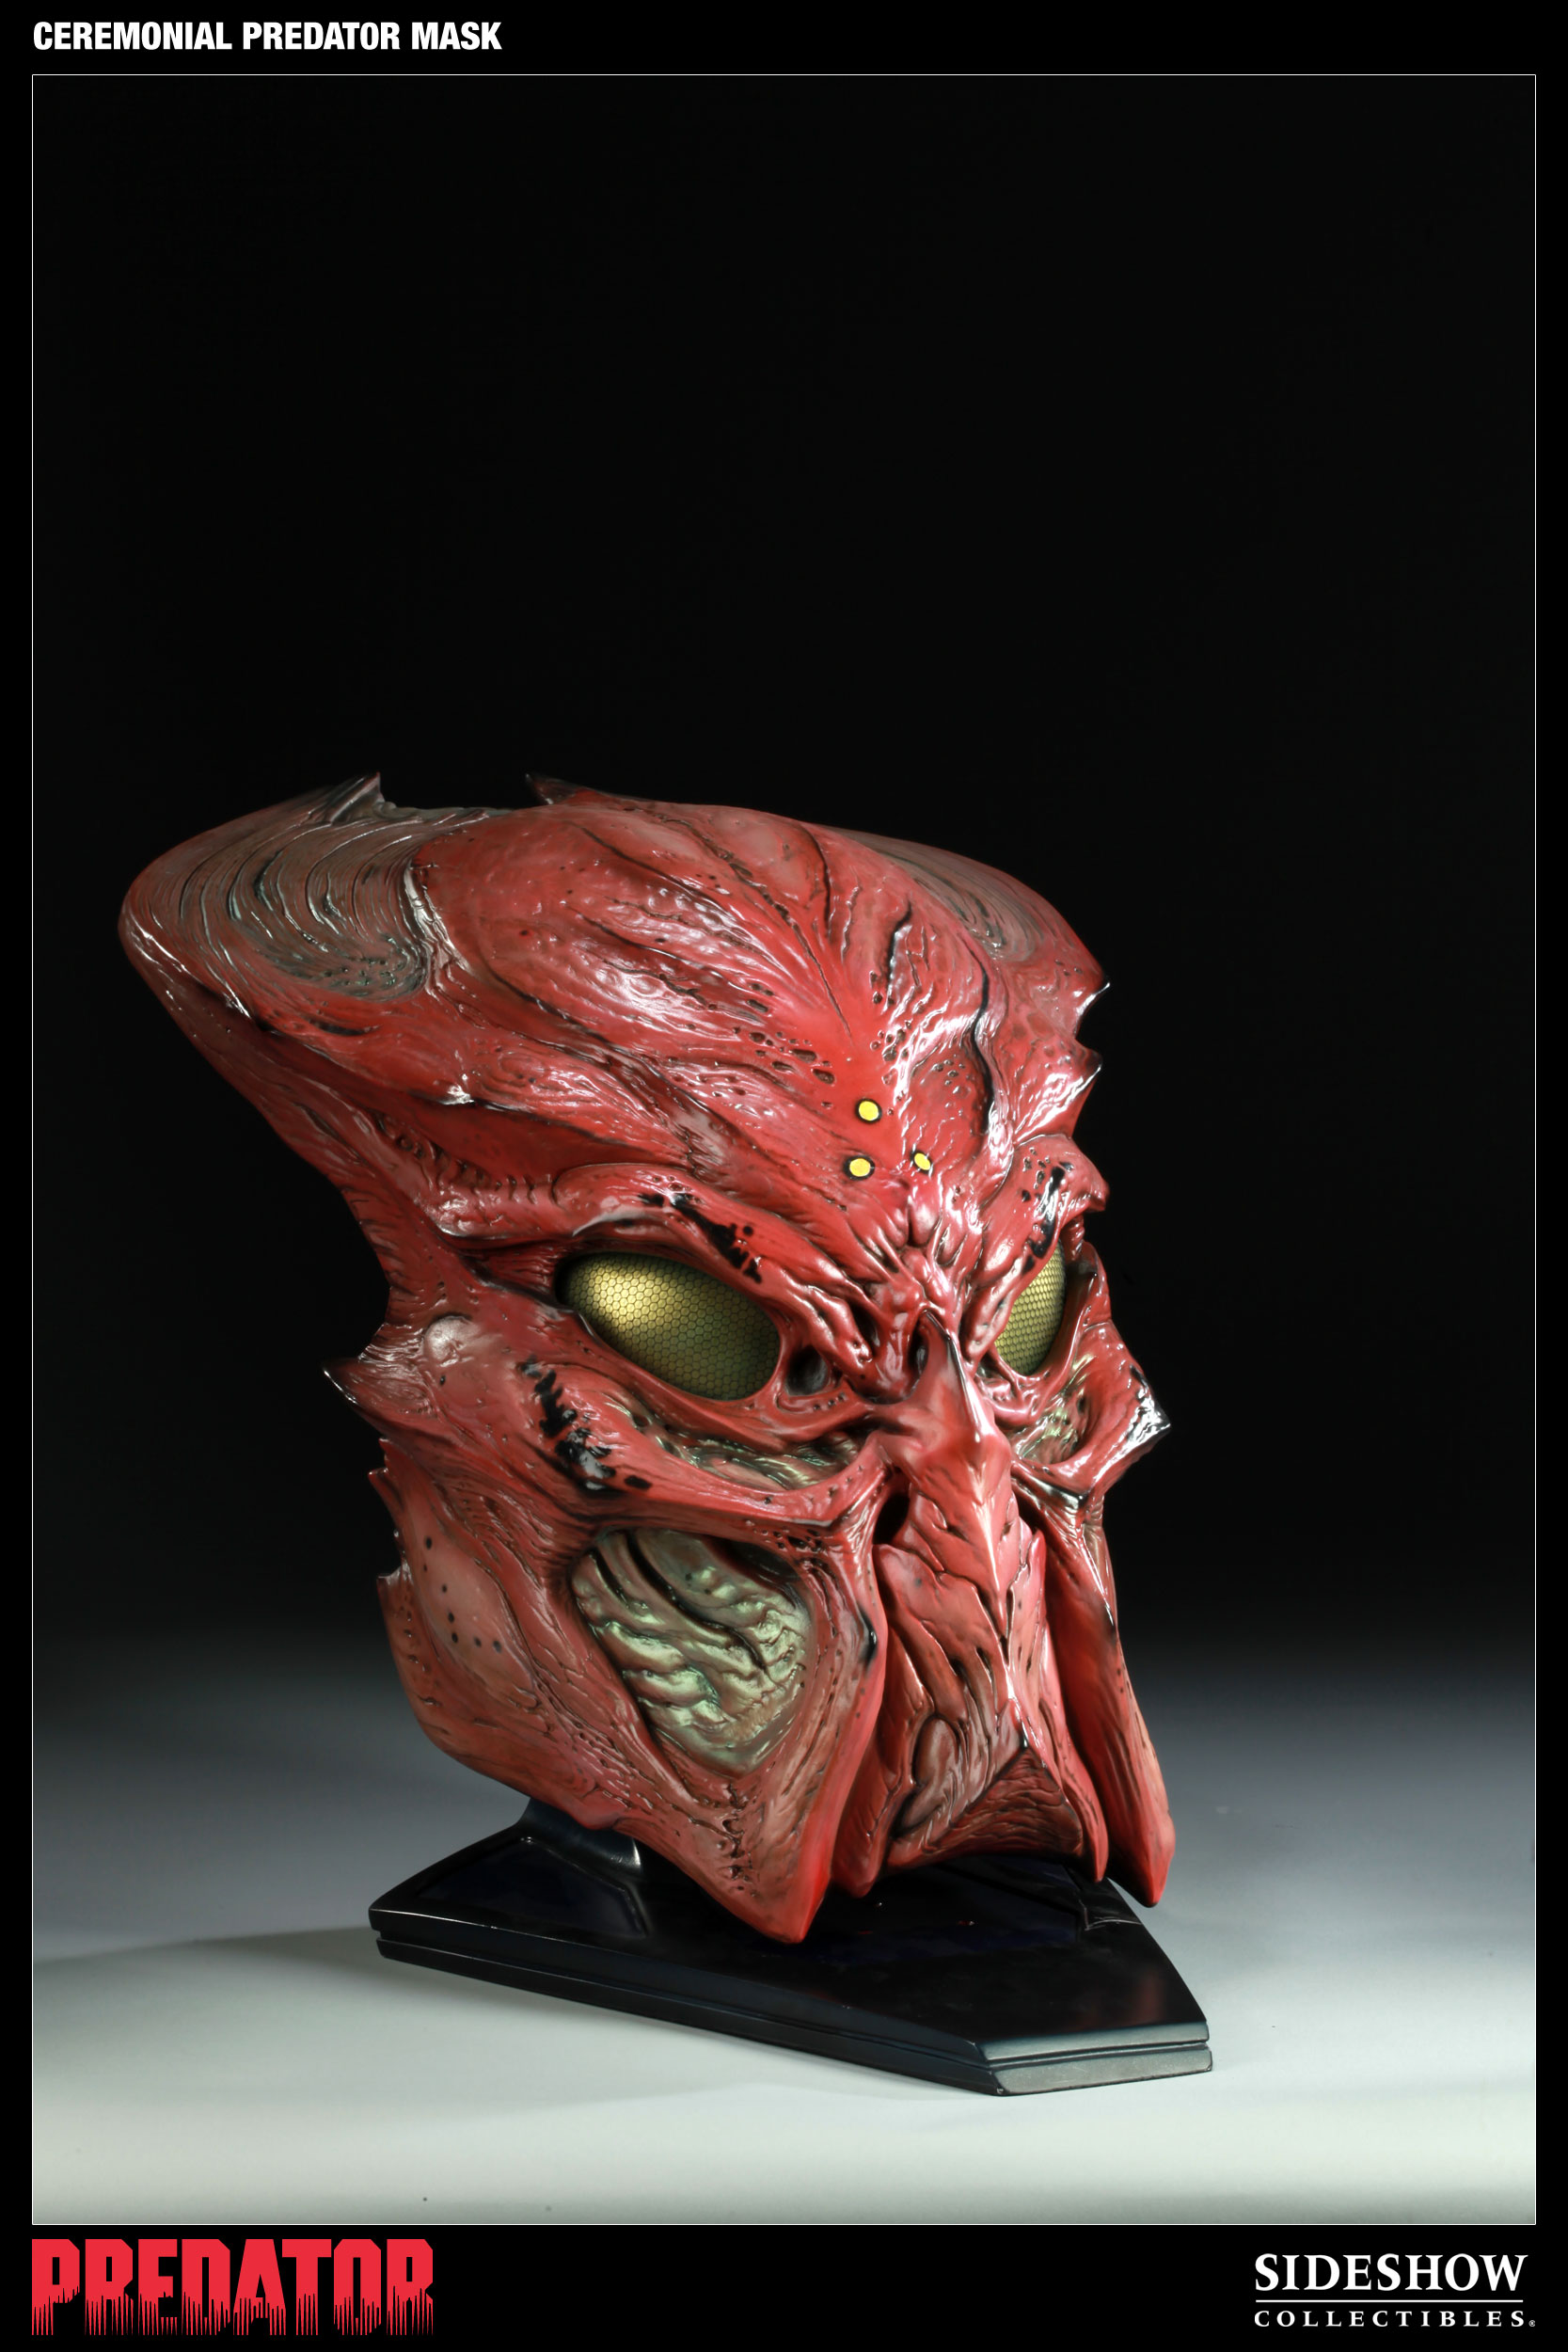 Sideshow Ceremonial Predator Mask 01